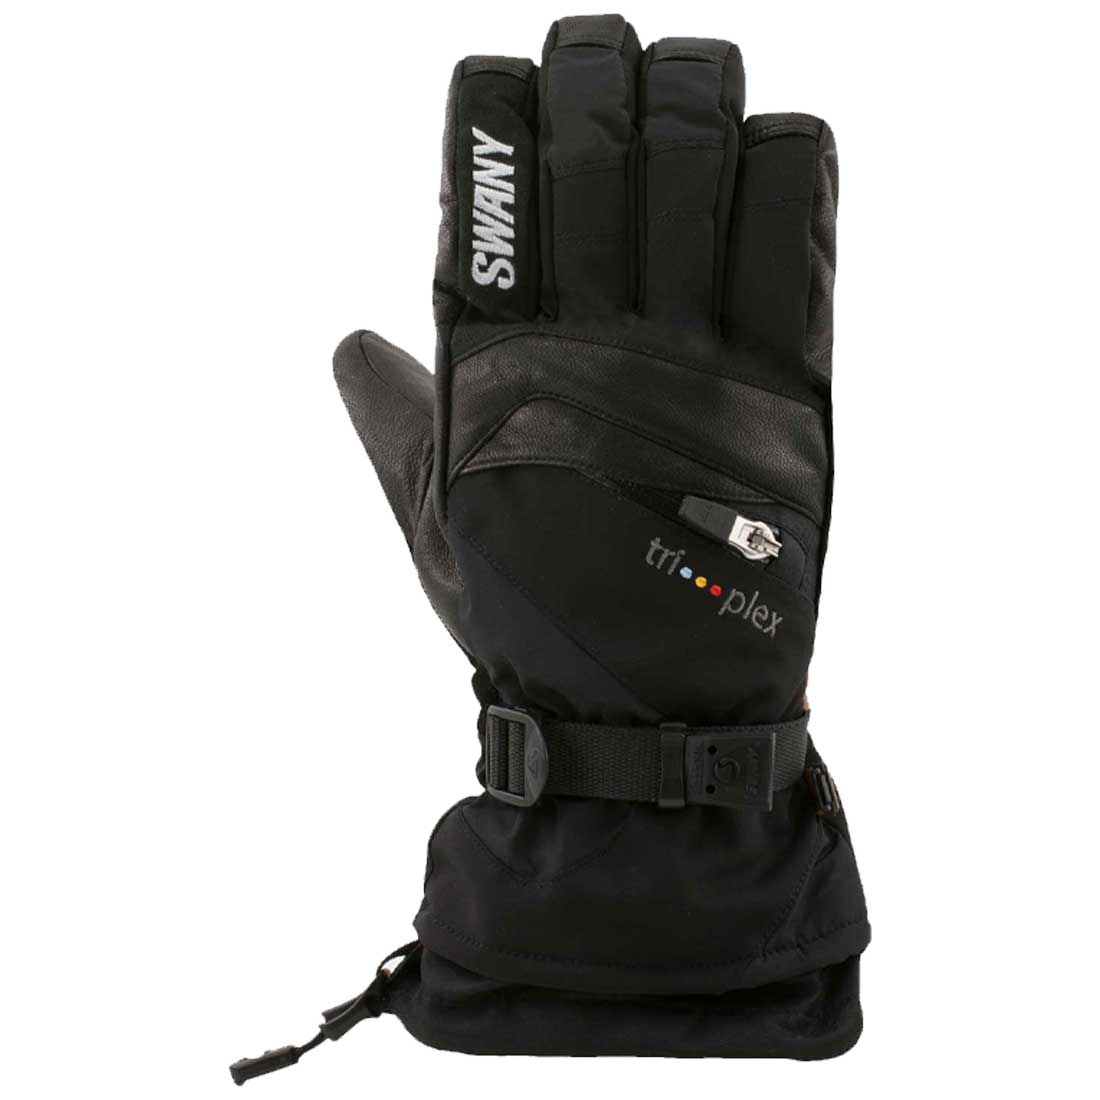 Swany X-Change Glove 2.1 - Men's